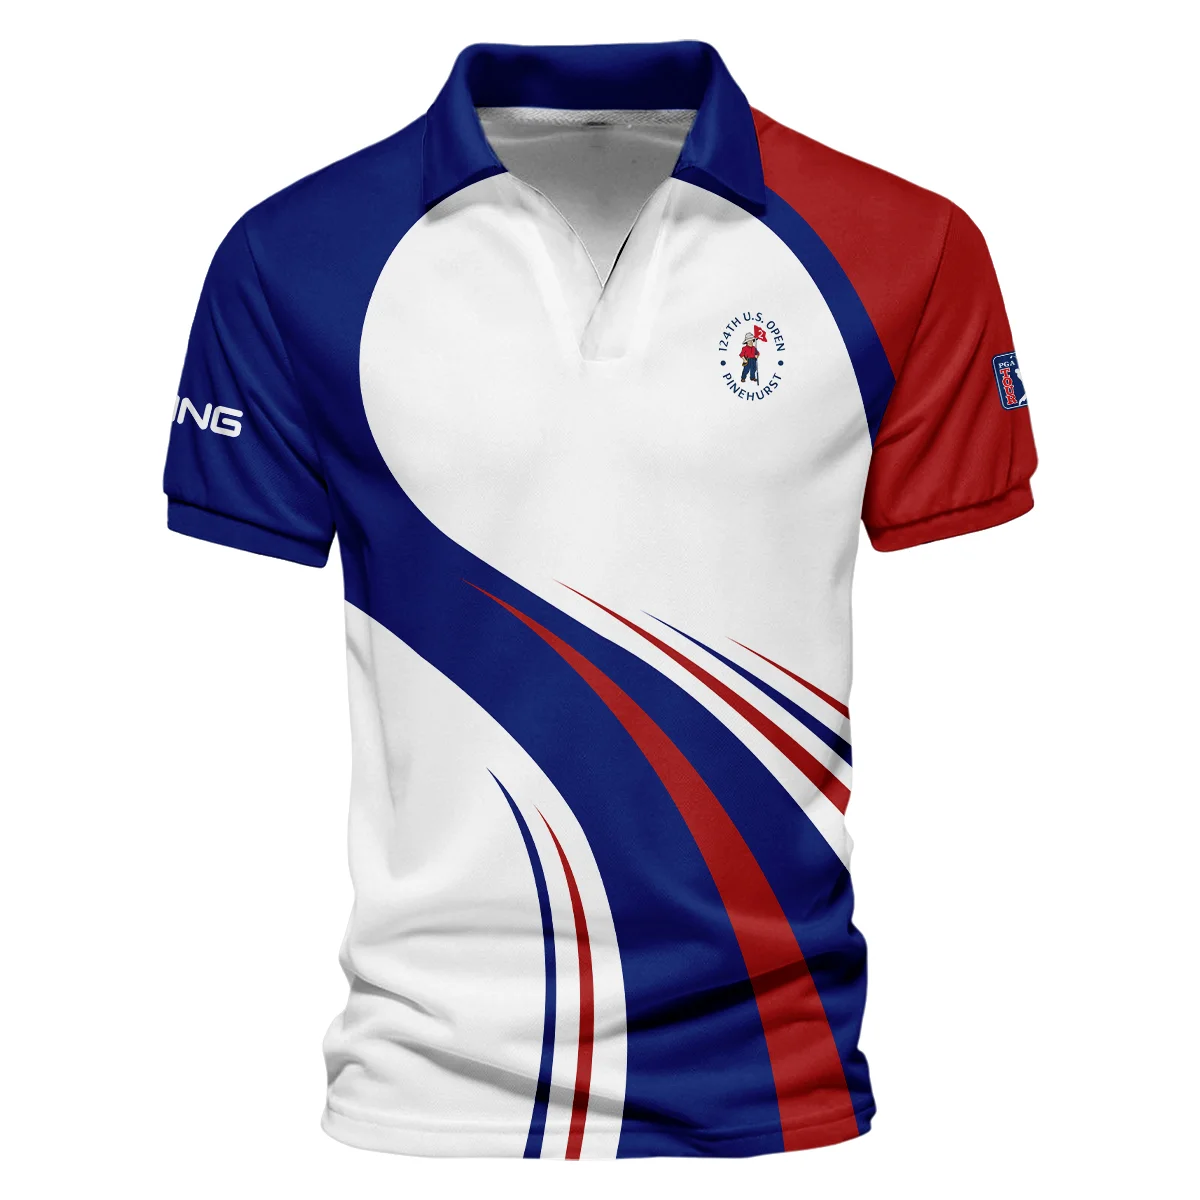 Ping 124th U.S. Open Pinehurst Golf Blue Red White Background Vneck Polo Shirt Style Classic Polo Shirt For Men